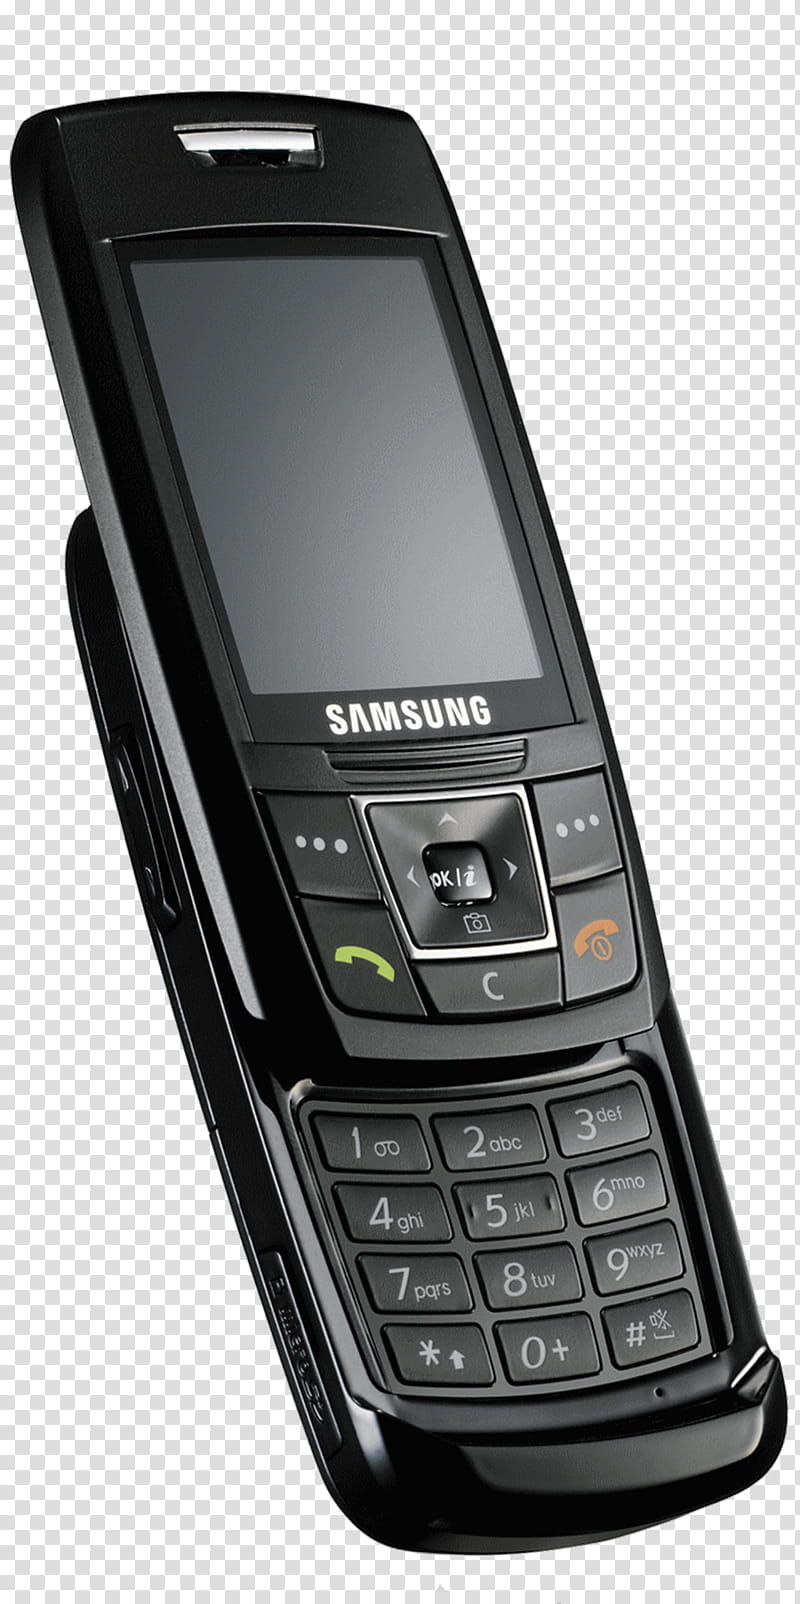 Galaxy, Samsung Sghe250i, Samsung Sghd500, Samsung E250, Samsung I900 Omnia, Samsung Sghi600, Samsung Galaxy, Samsung Omnia Series transparent background PNG clipart